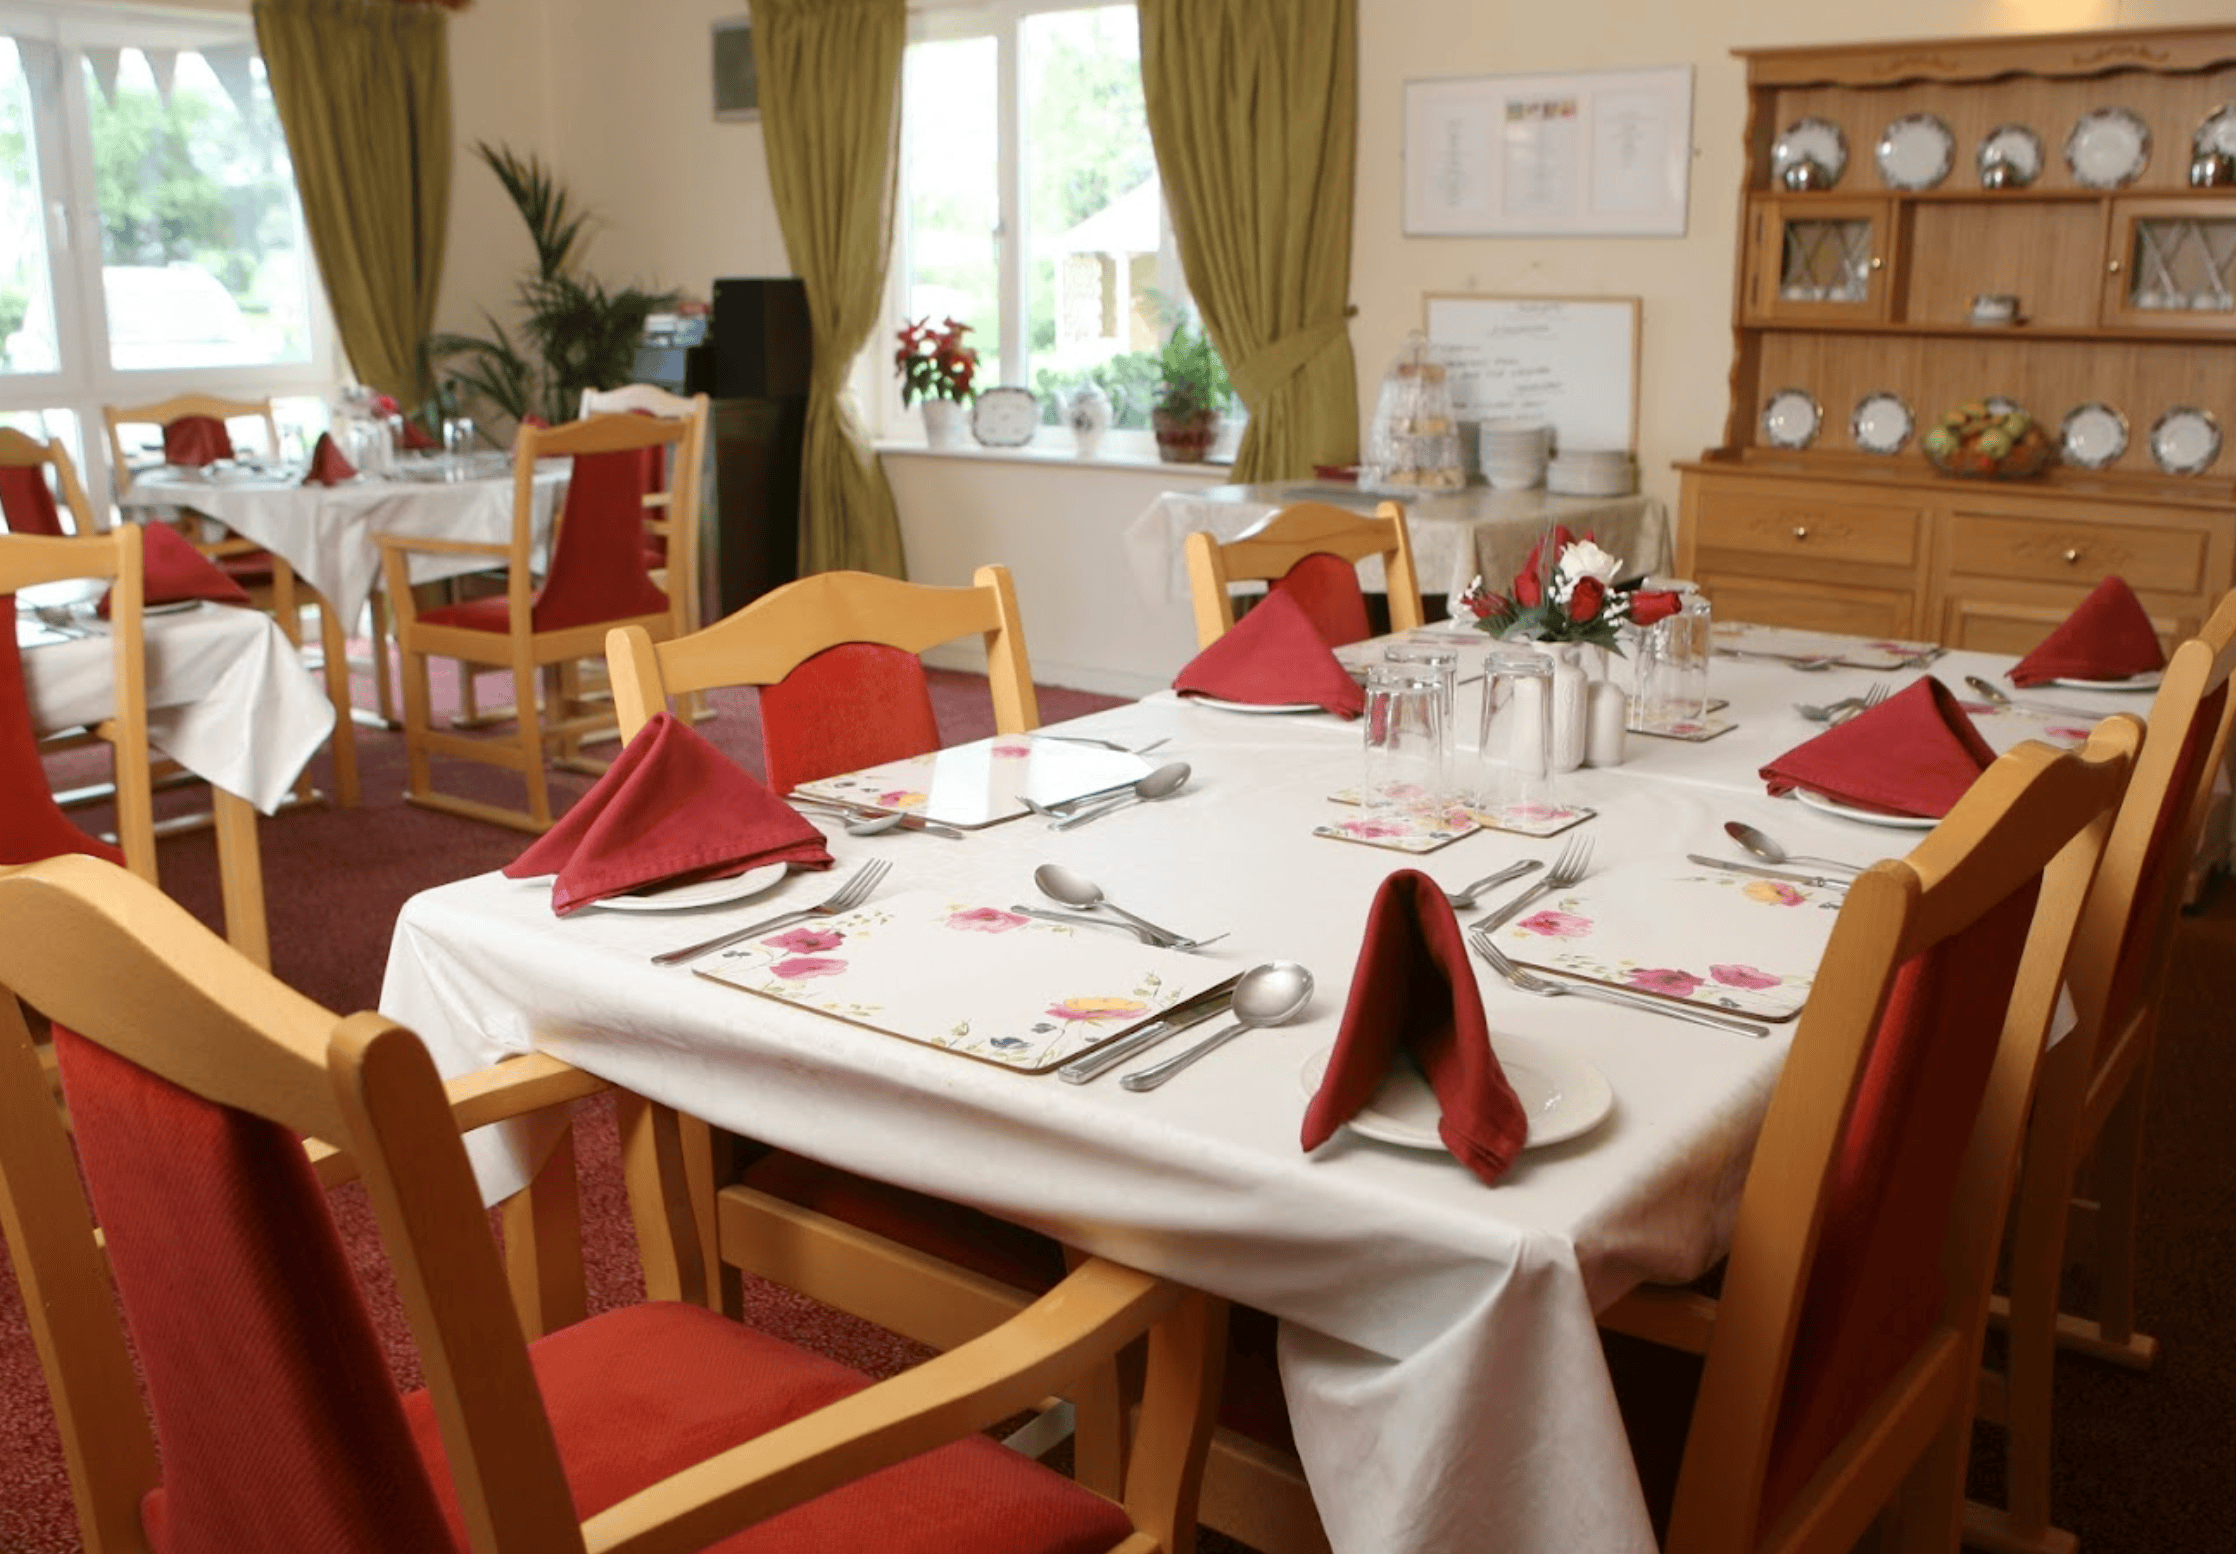 Dining room of Heathbrook House in Bromsgrove, Worcestershire